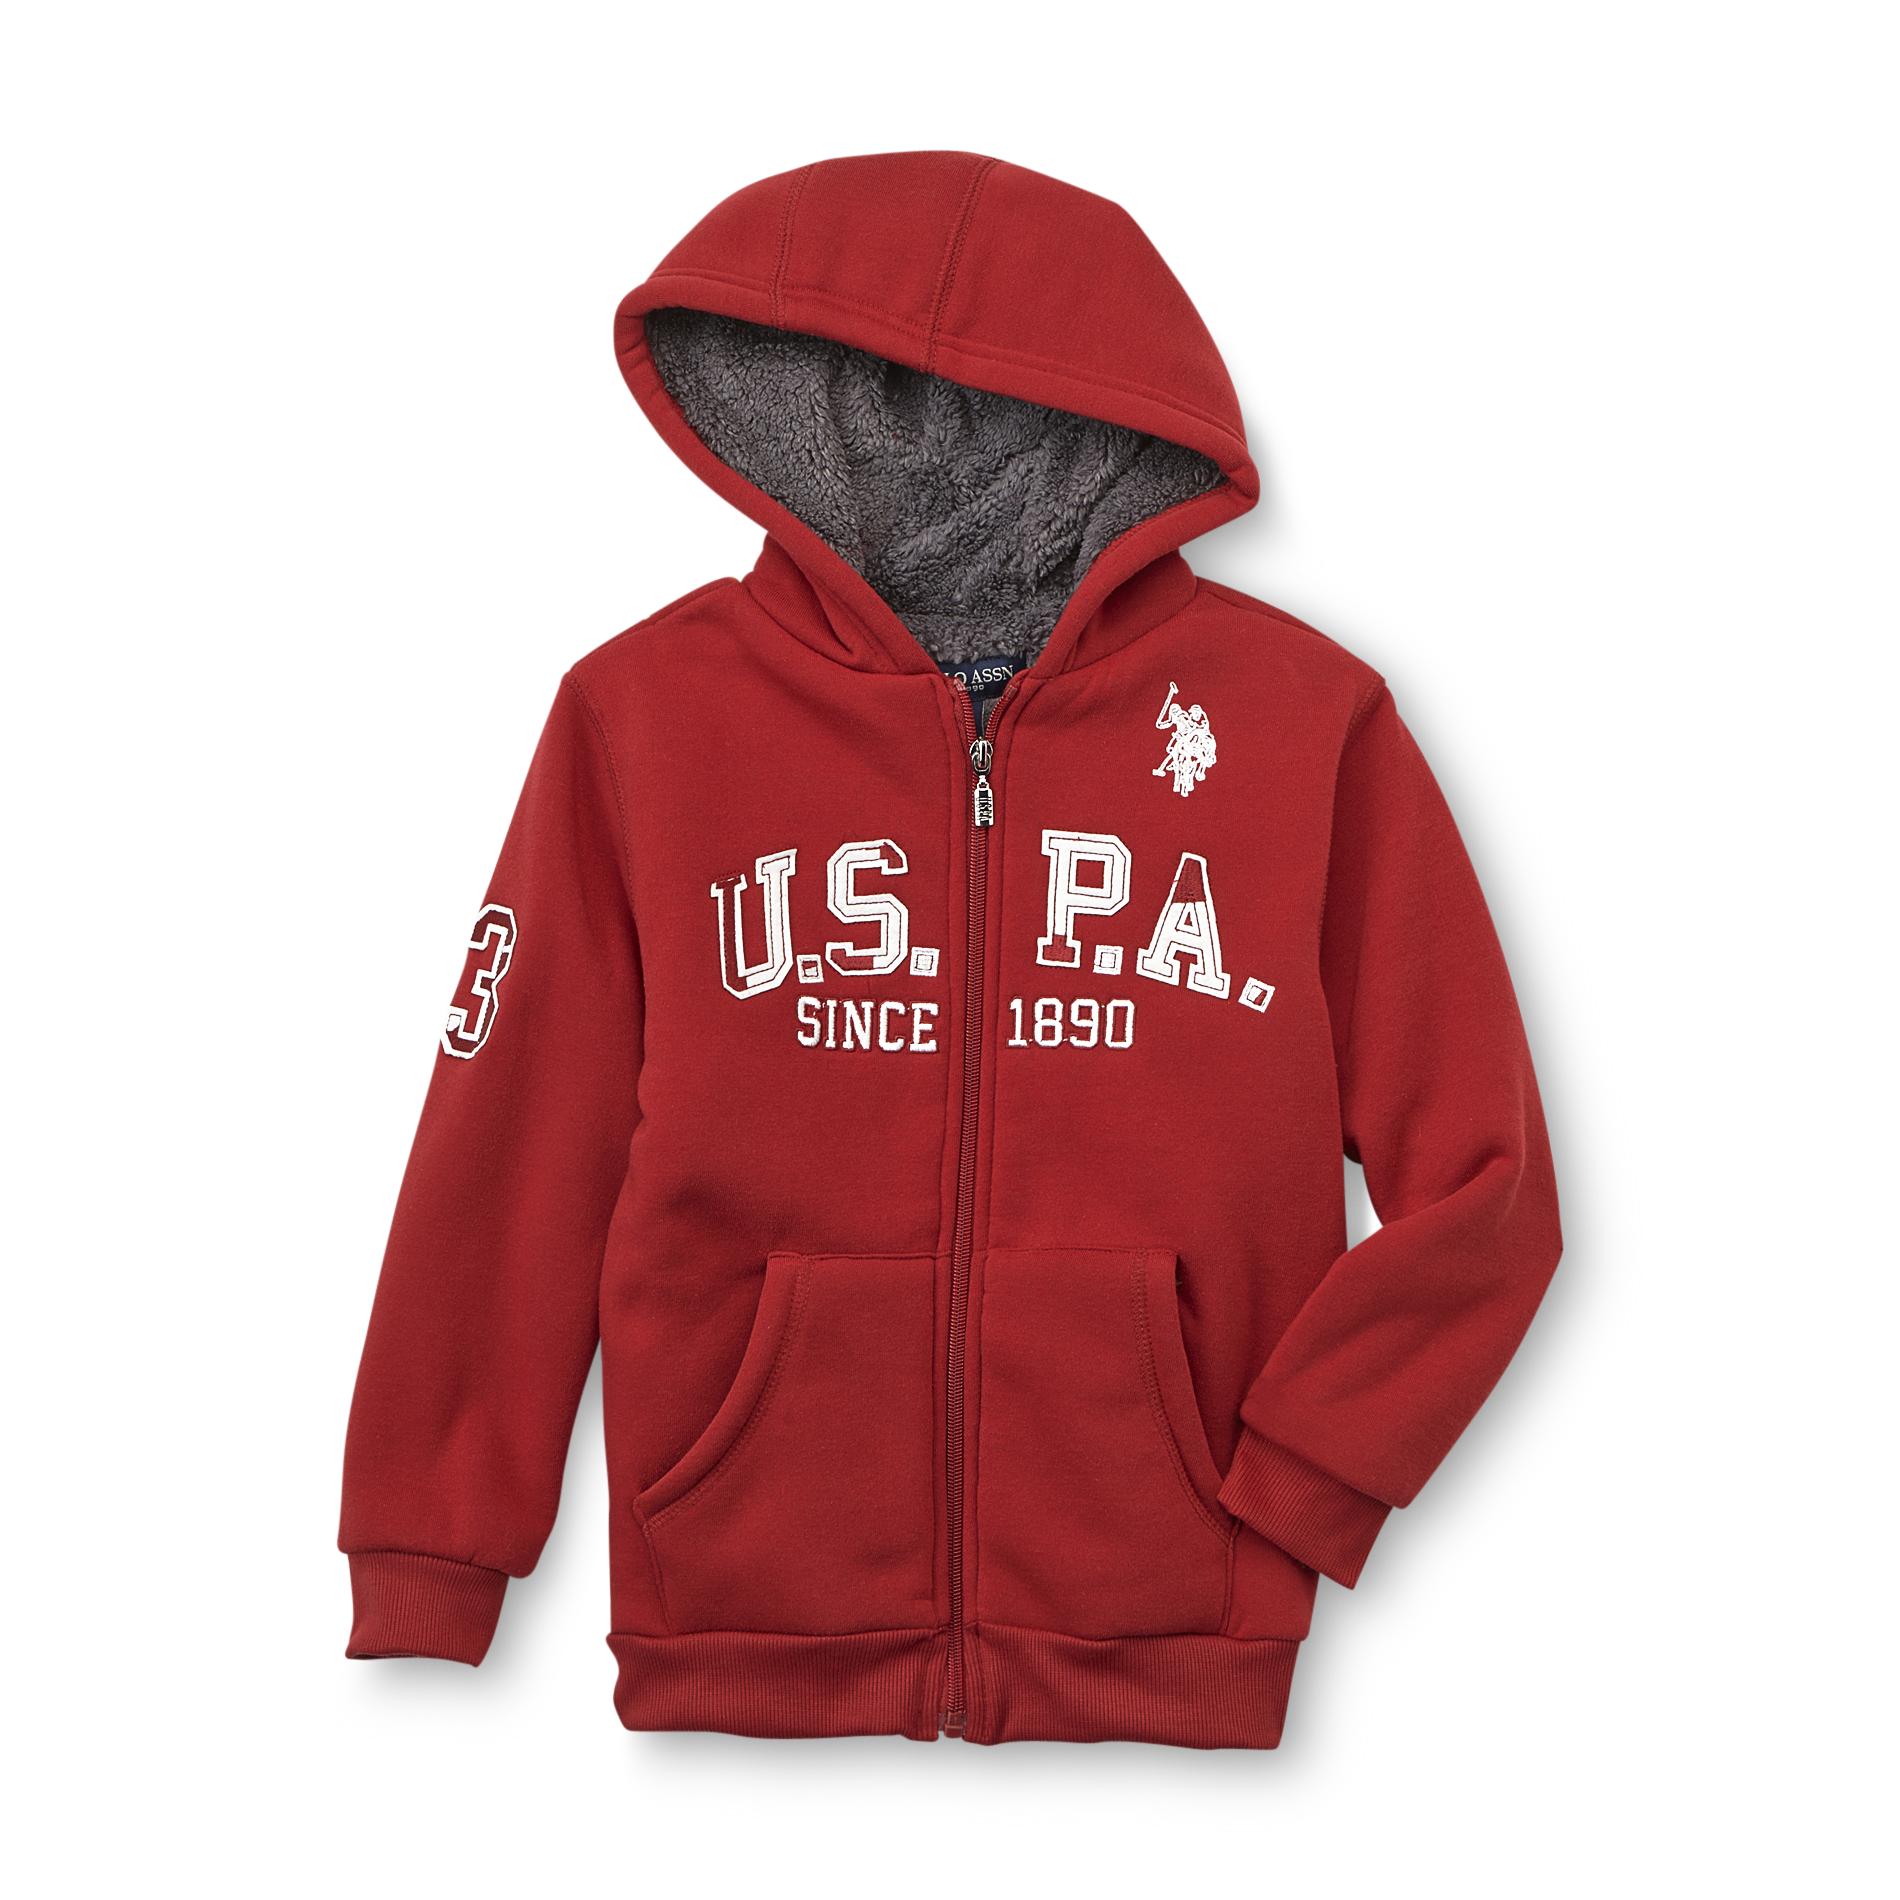 U.S. Polo Assn. Boy's Double-Knit Fleece Hooded Jacket - Logo Design